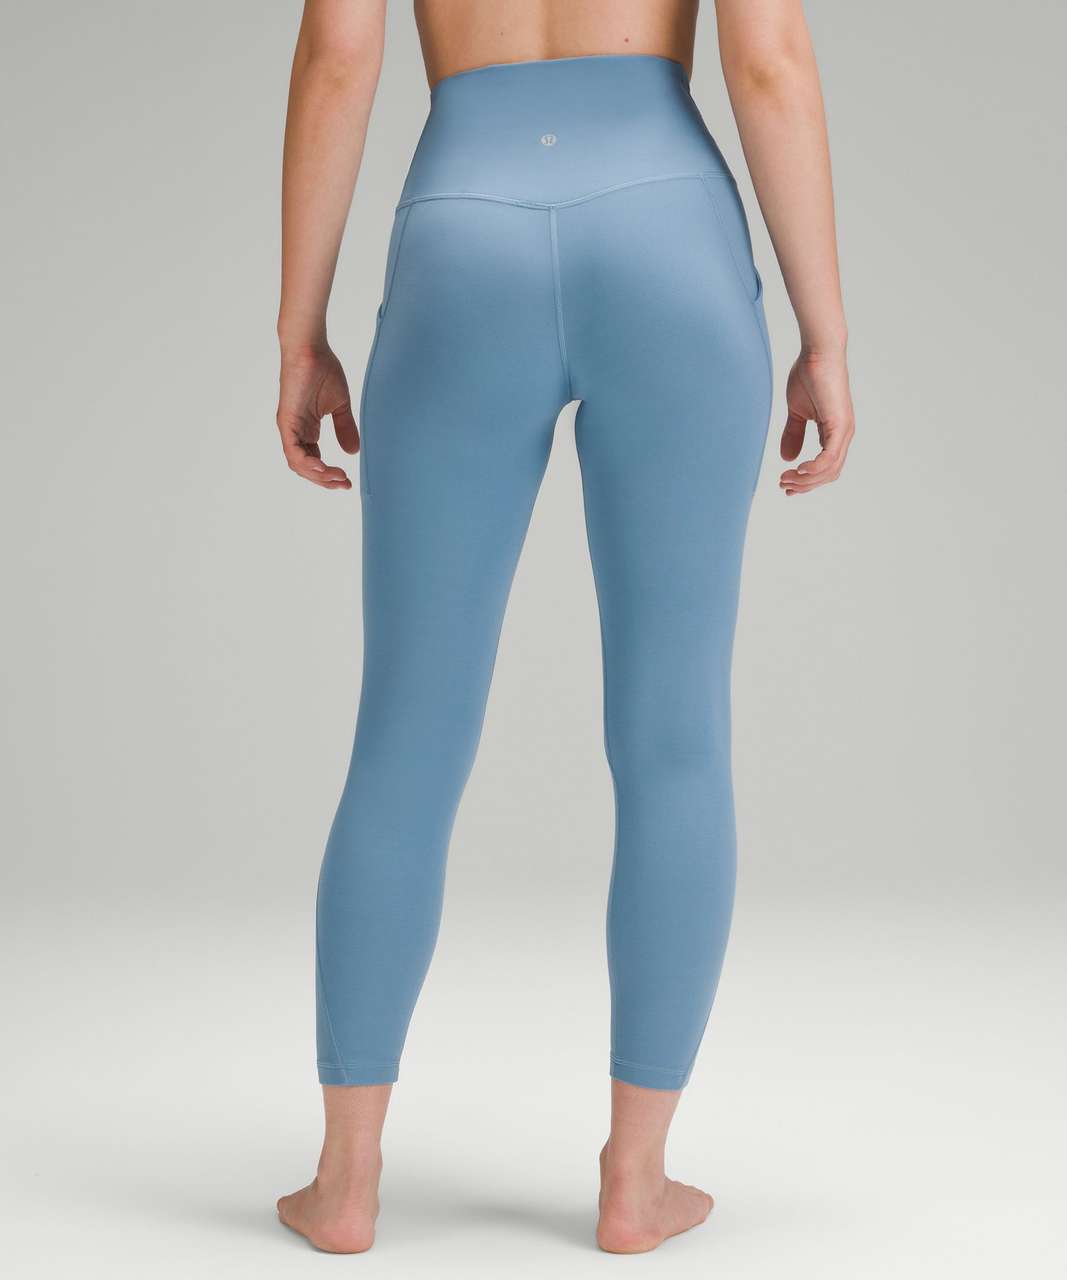 Lululemon Align High-Rise Pant with Pockets 25 - Utility Blue